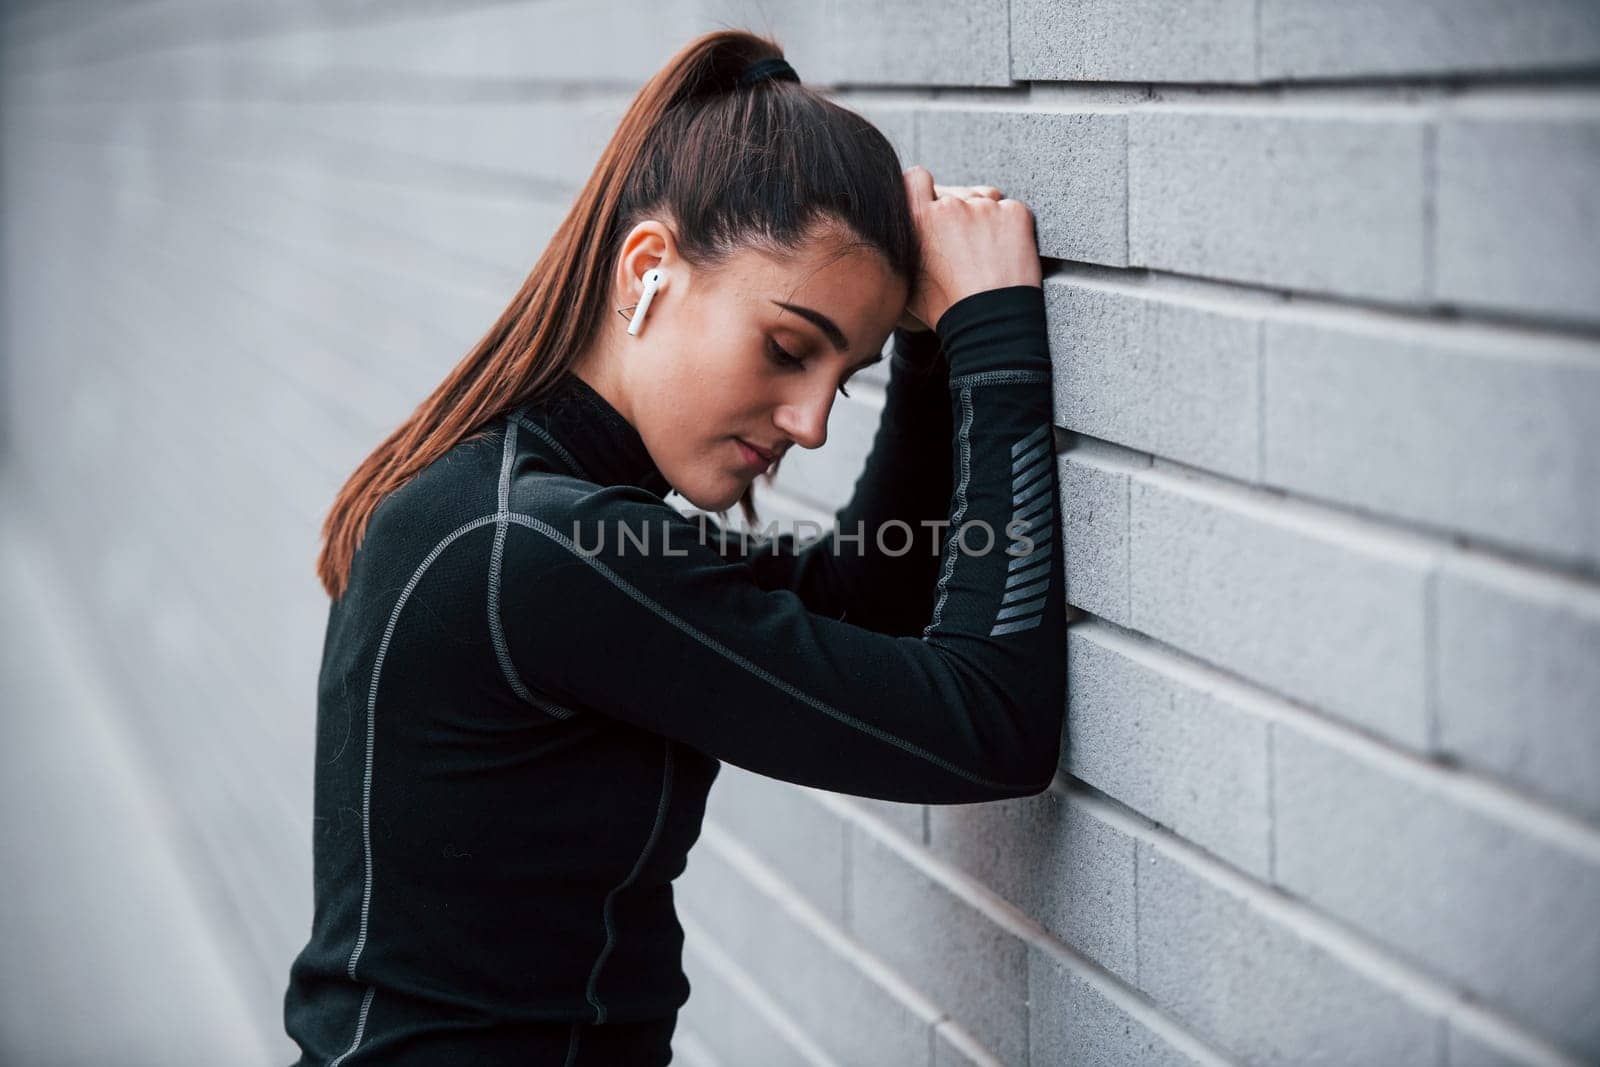 Young sportive girl in black sportswear outdoors near gray wall.